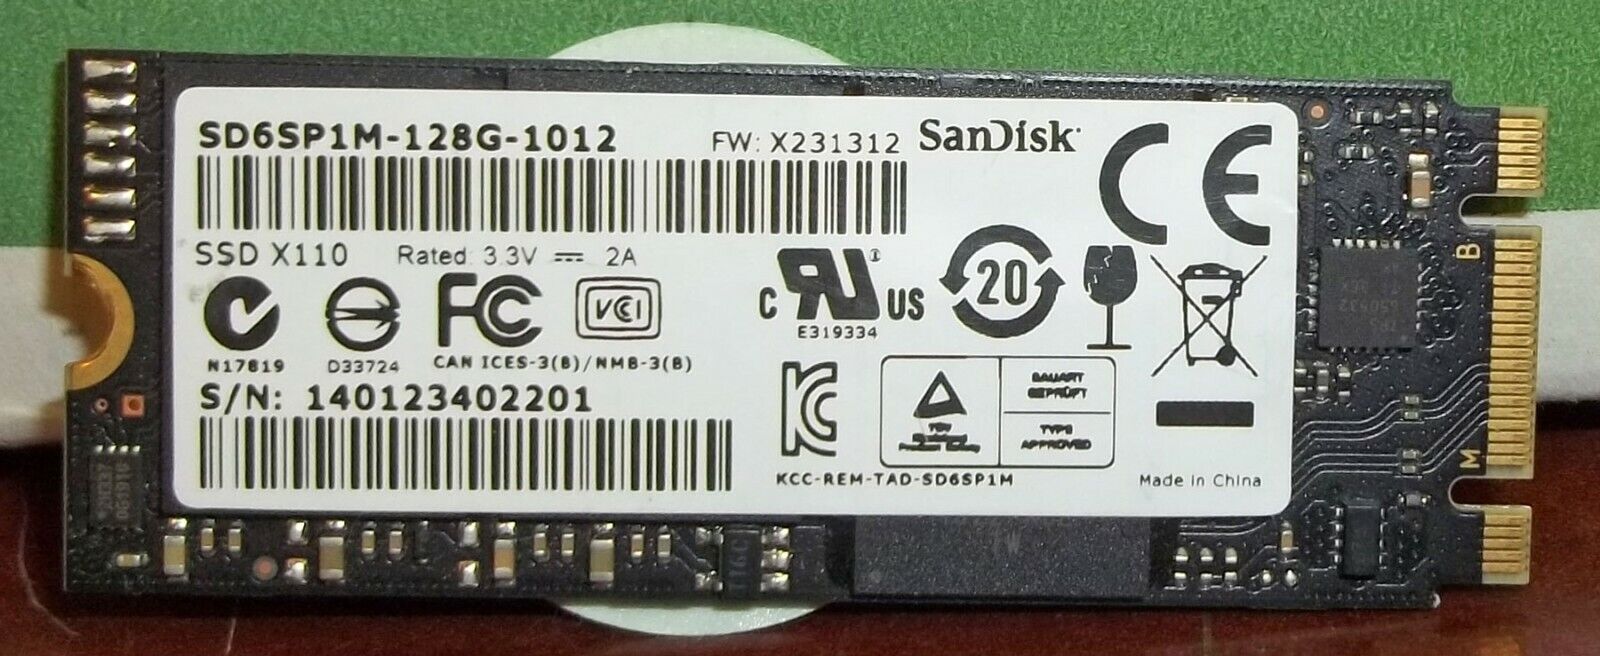 SanDisk SSD X110 128GB SATA SD6SP1M-128G-1012 Free Ship